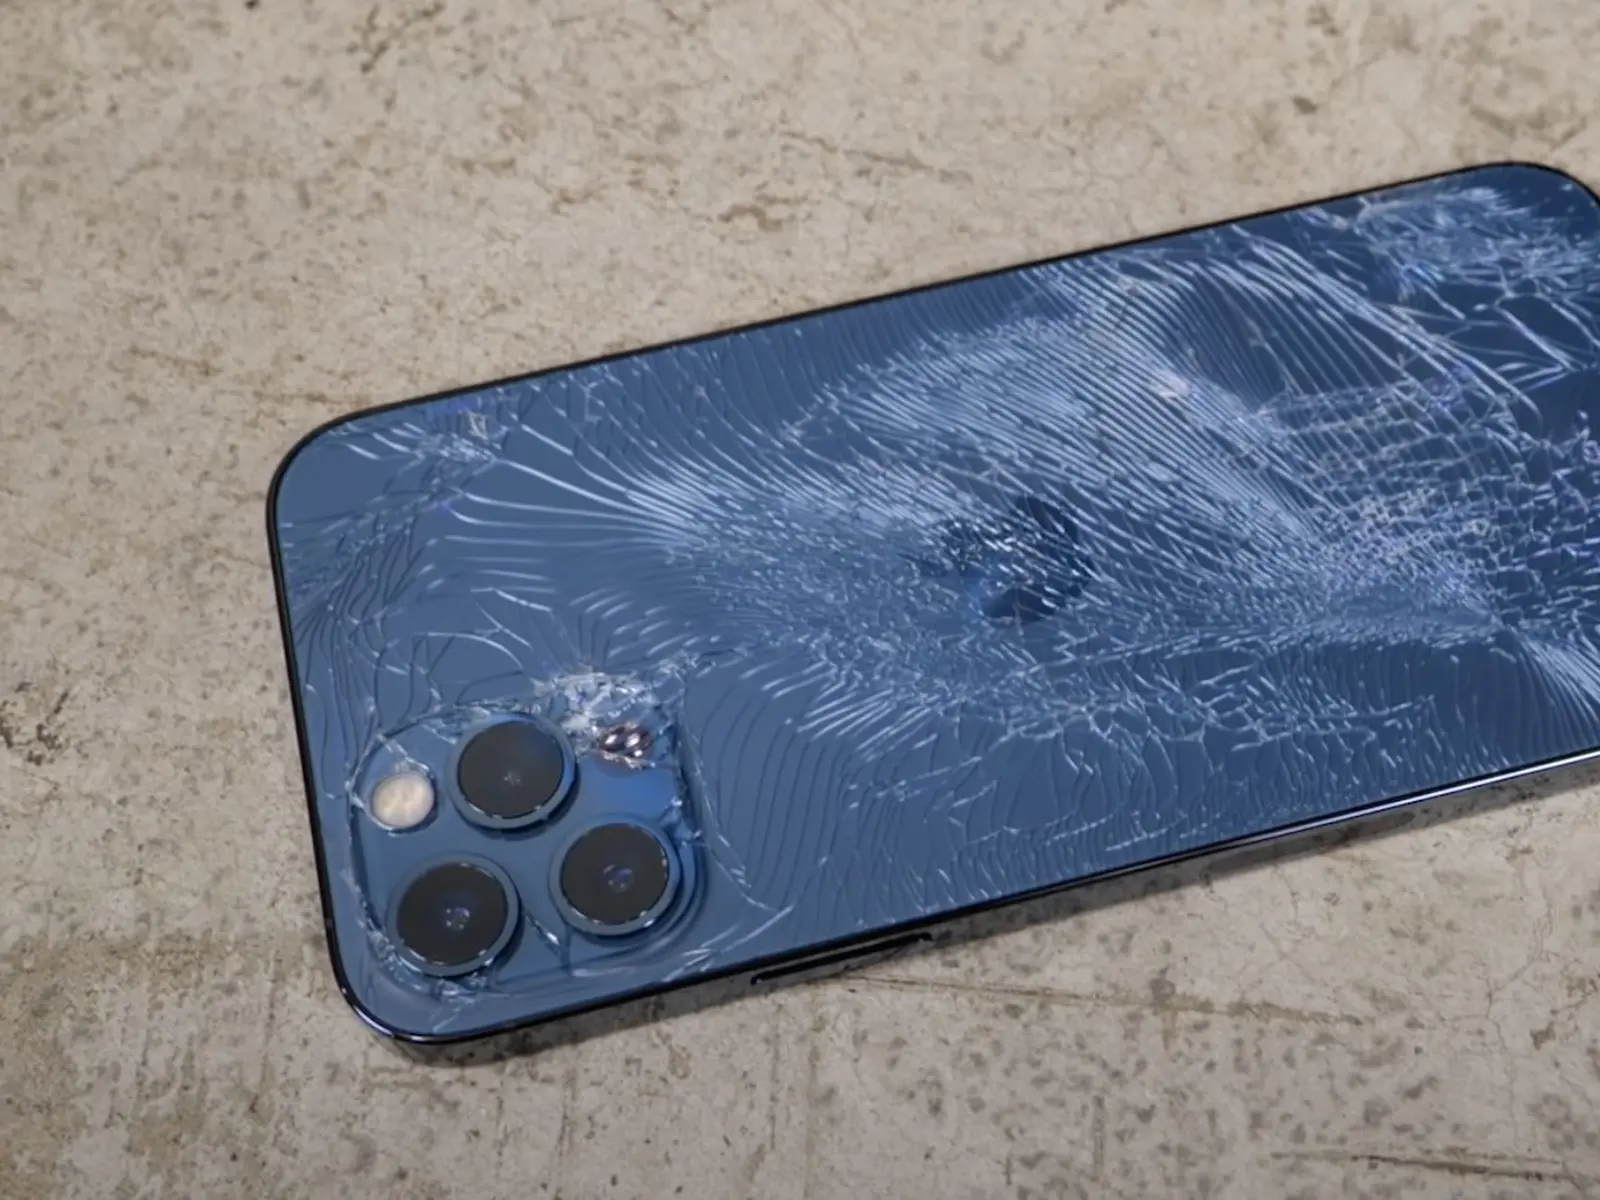 broken-iphone-14-Pro-Max-rear-glass-repair-service-bangalore